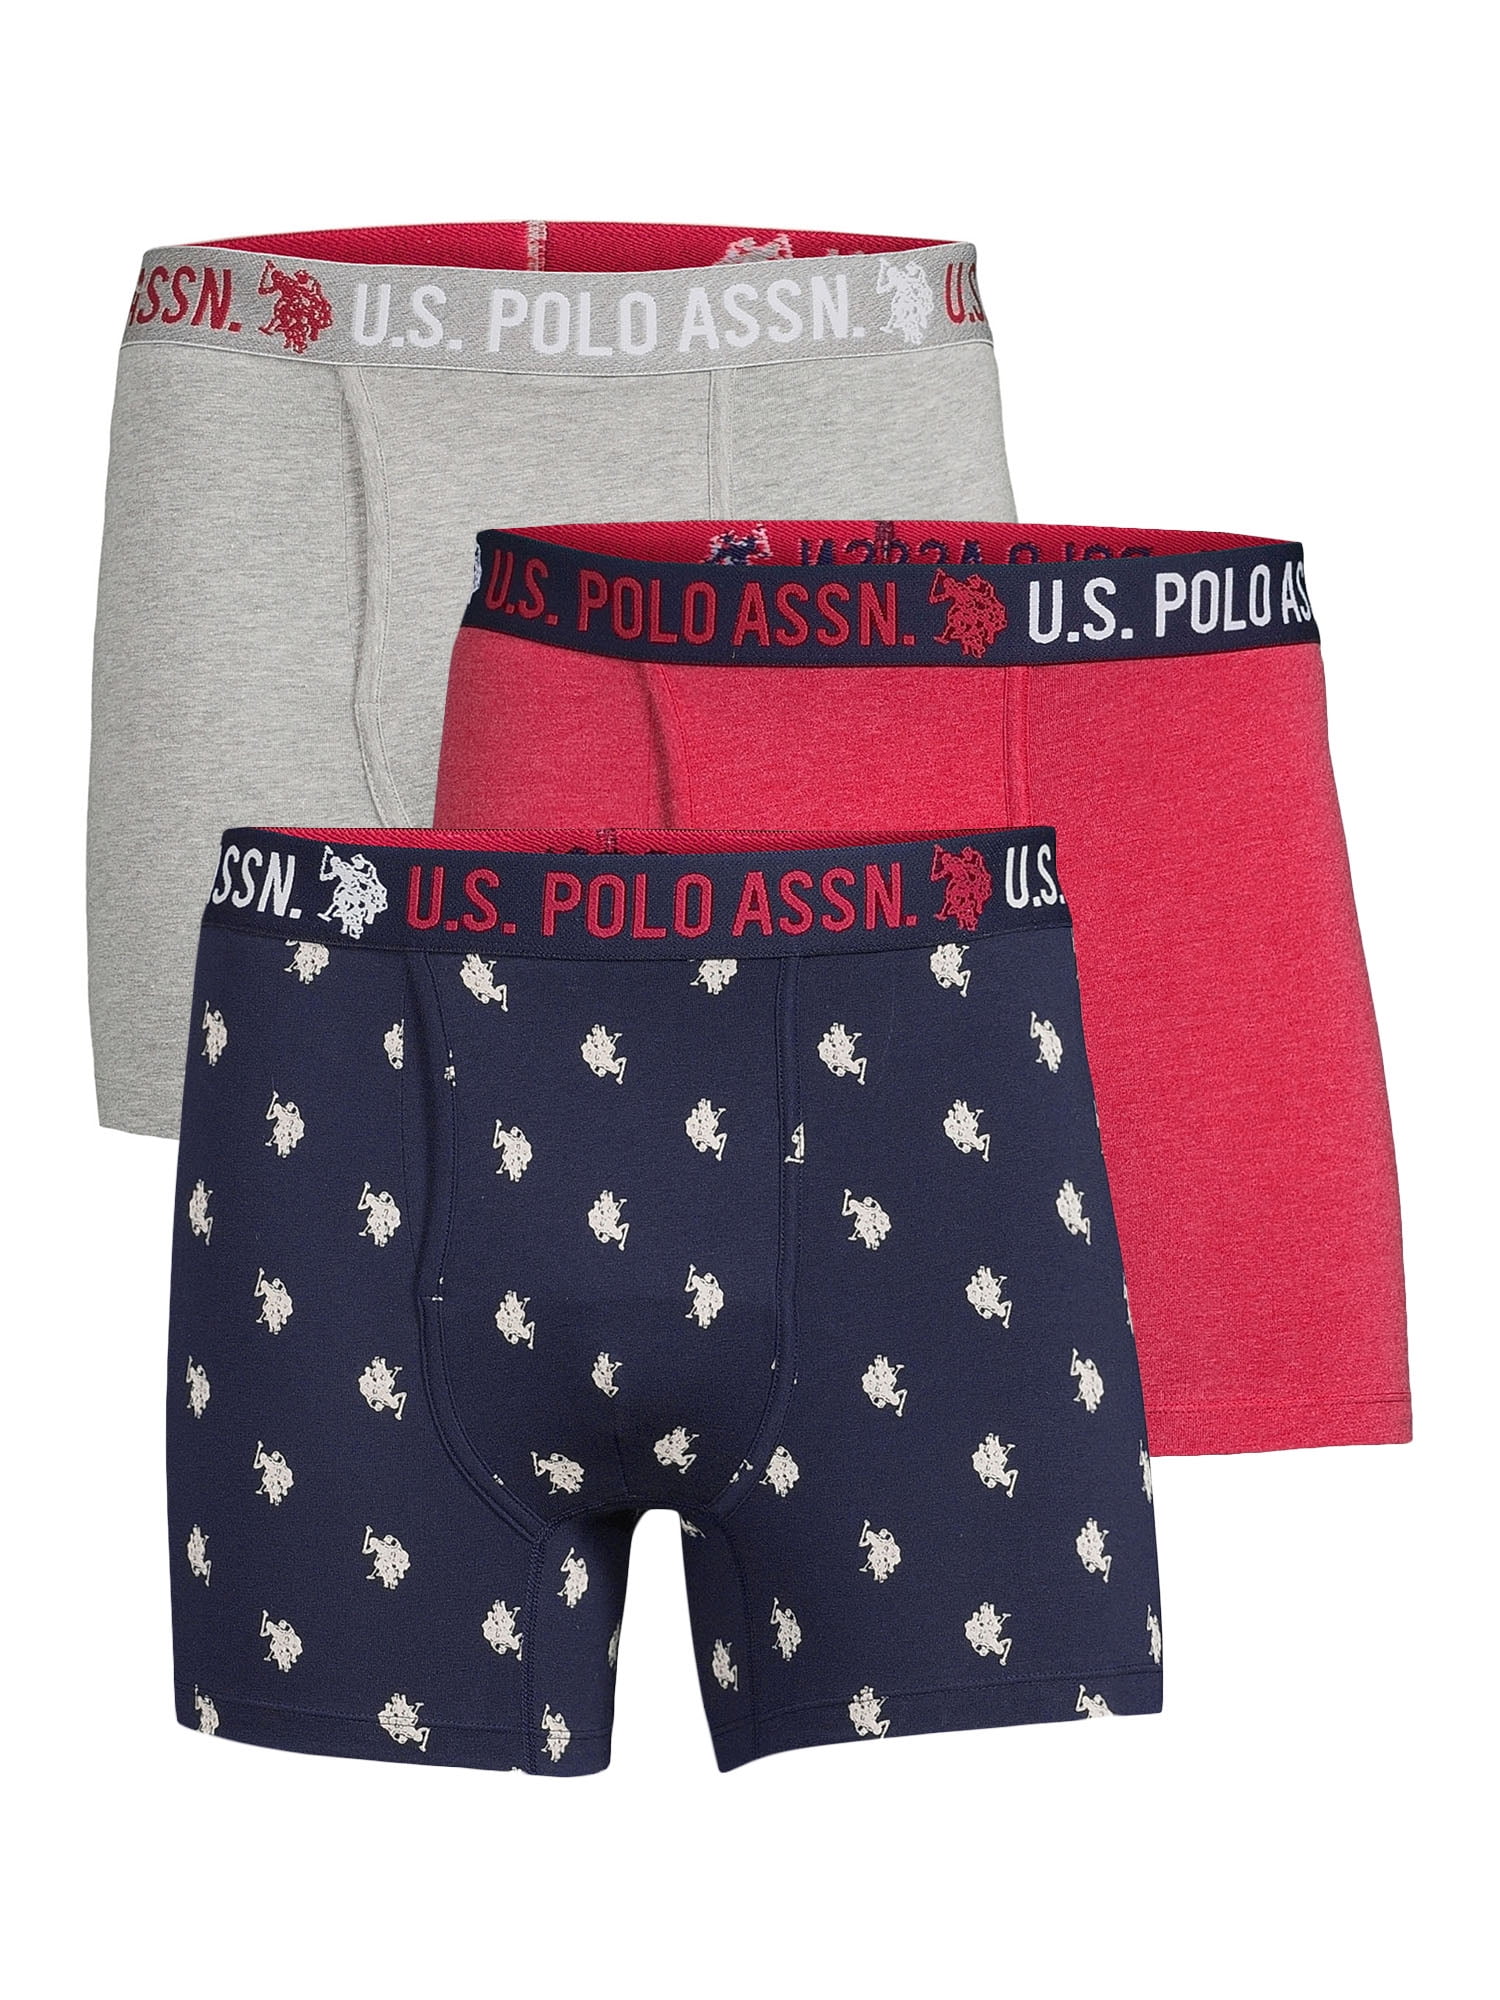 U.S. Polo Assn. Men's Cotton Stretch Mid Leg Boxer Briefs Underwear, 3-Pack